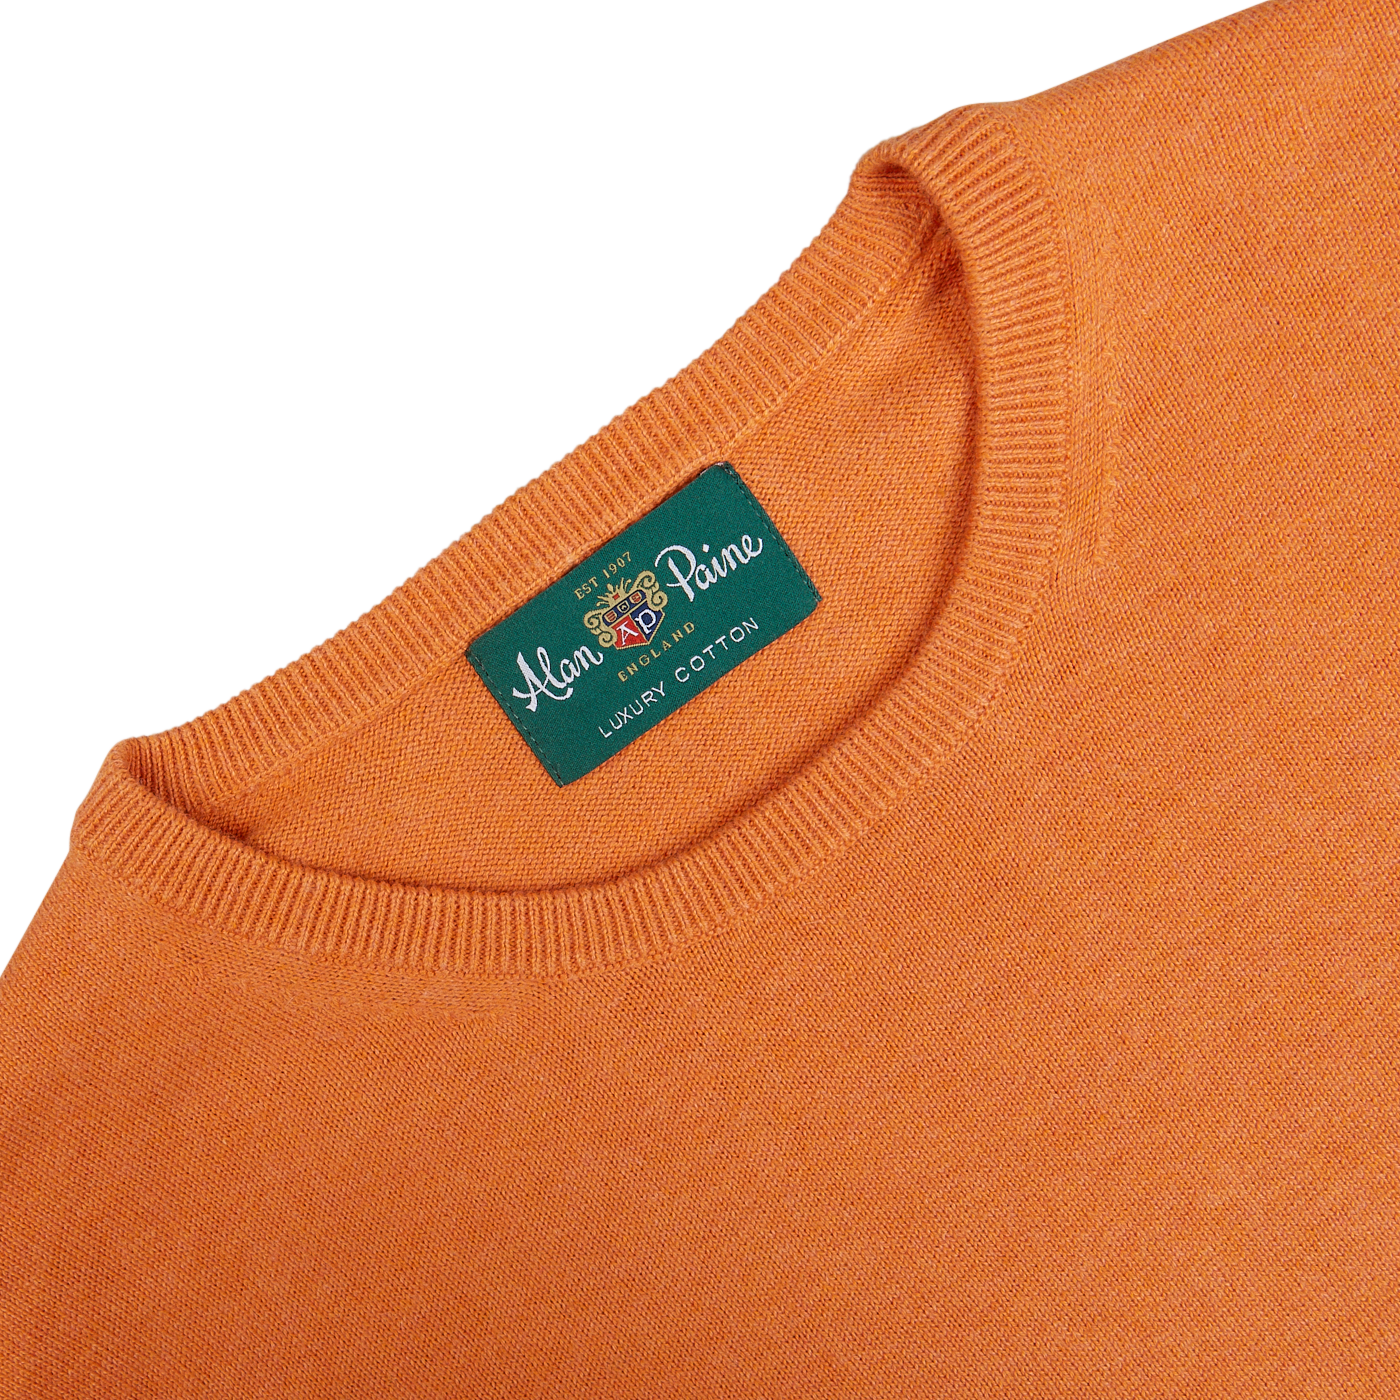 Close-up of the label on a Blazing Orange Luxury Cotton Crewneck by Alan Paine.